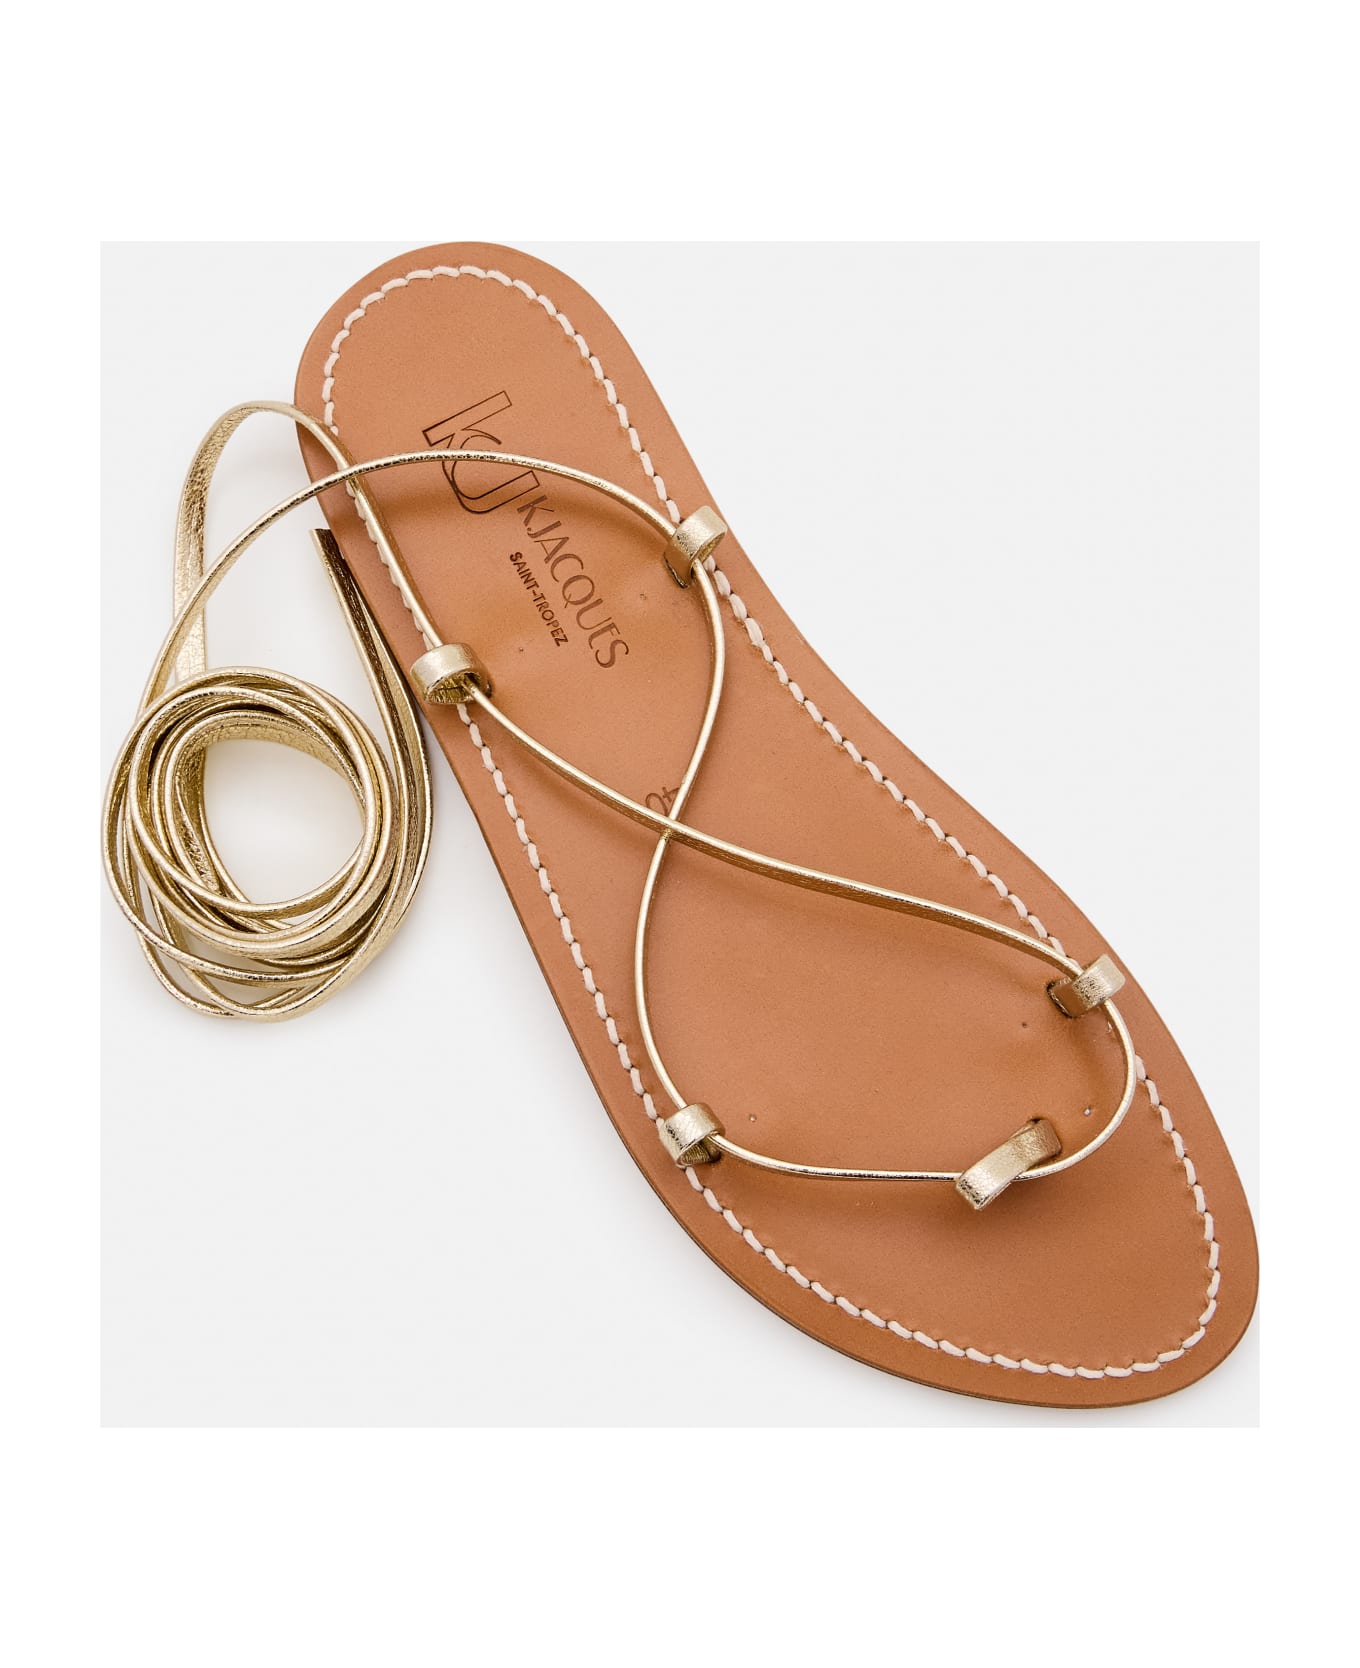 K.Jacques Bikini Leather Sandals - Golden サンダル